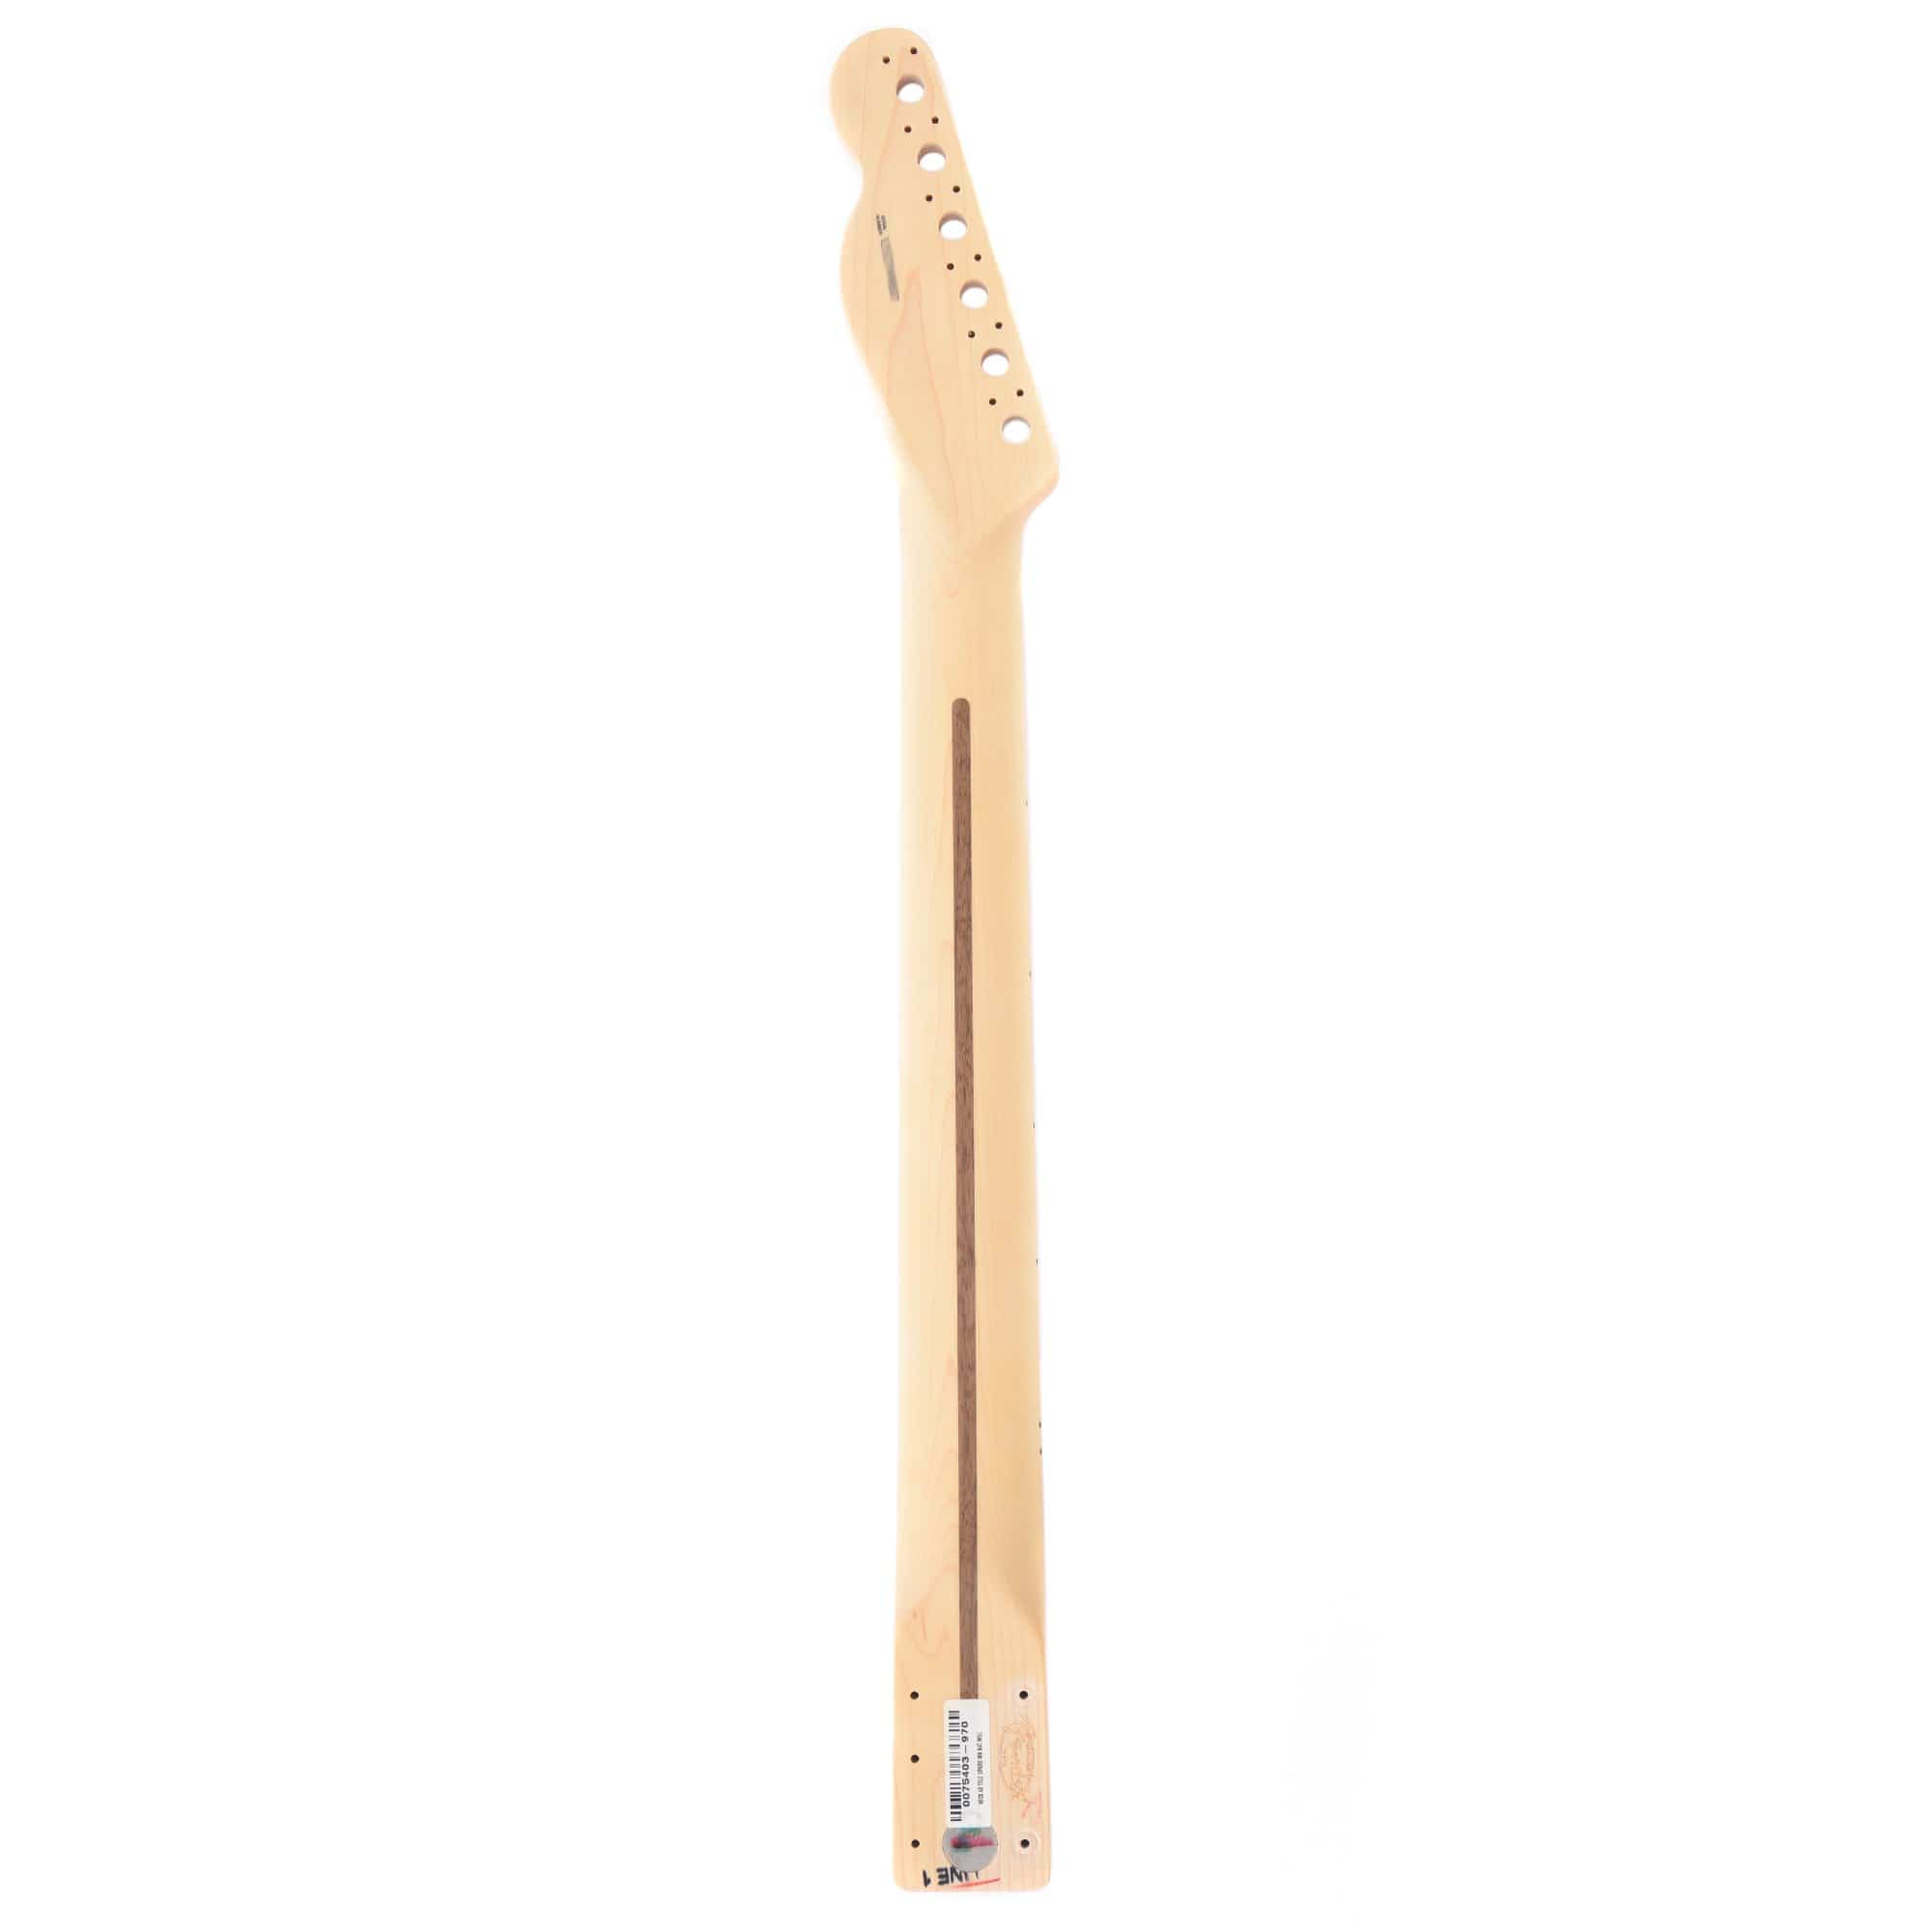 Fender Neck for American Standard Telecaster w/Maple Fingerboard 